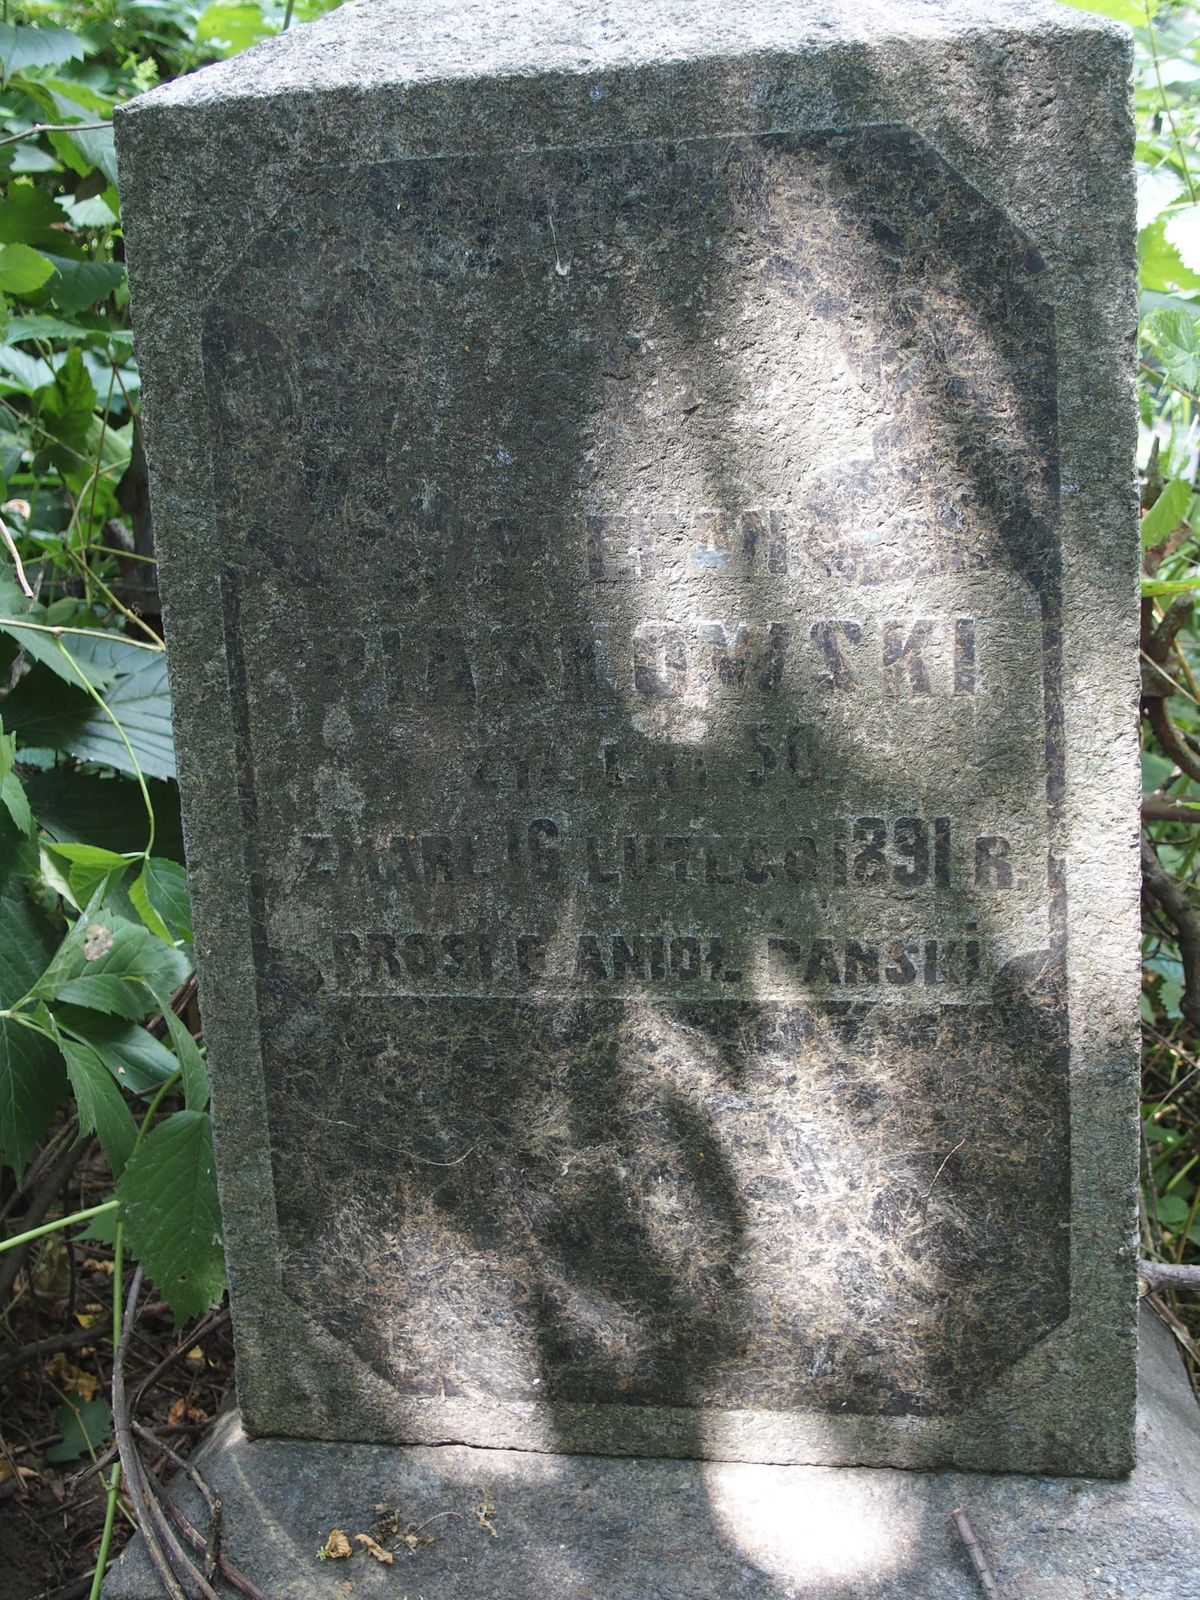 Napis z nagrobka Stefana Piaskowskiego